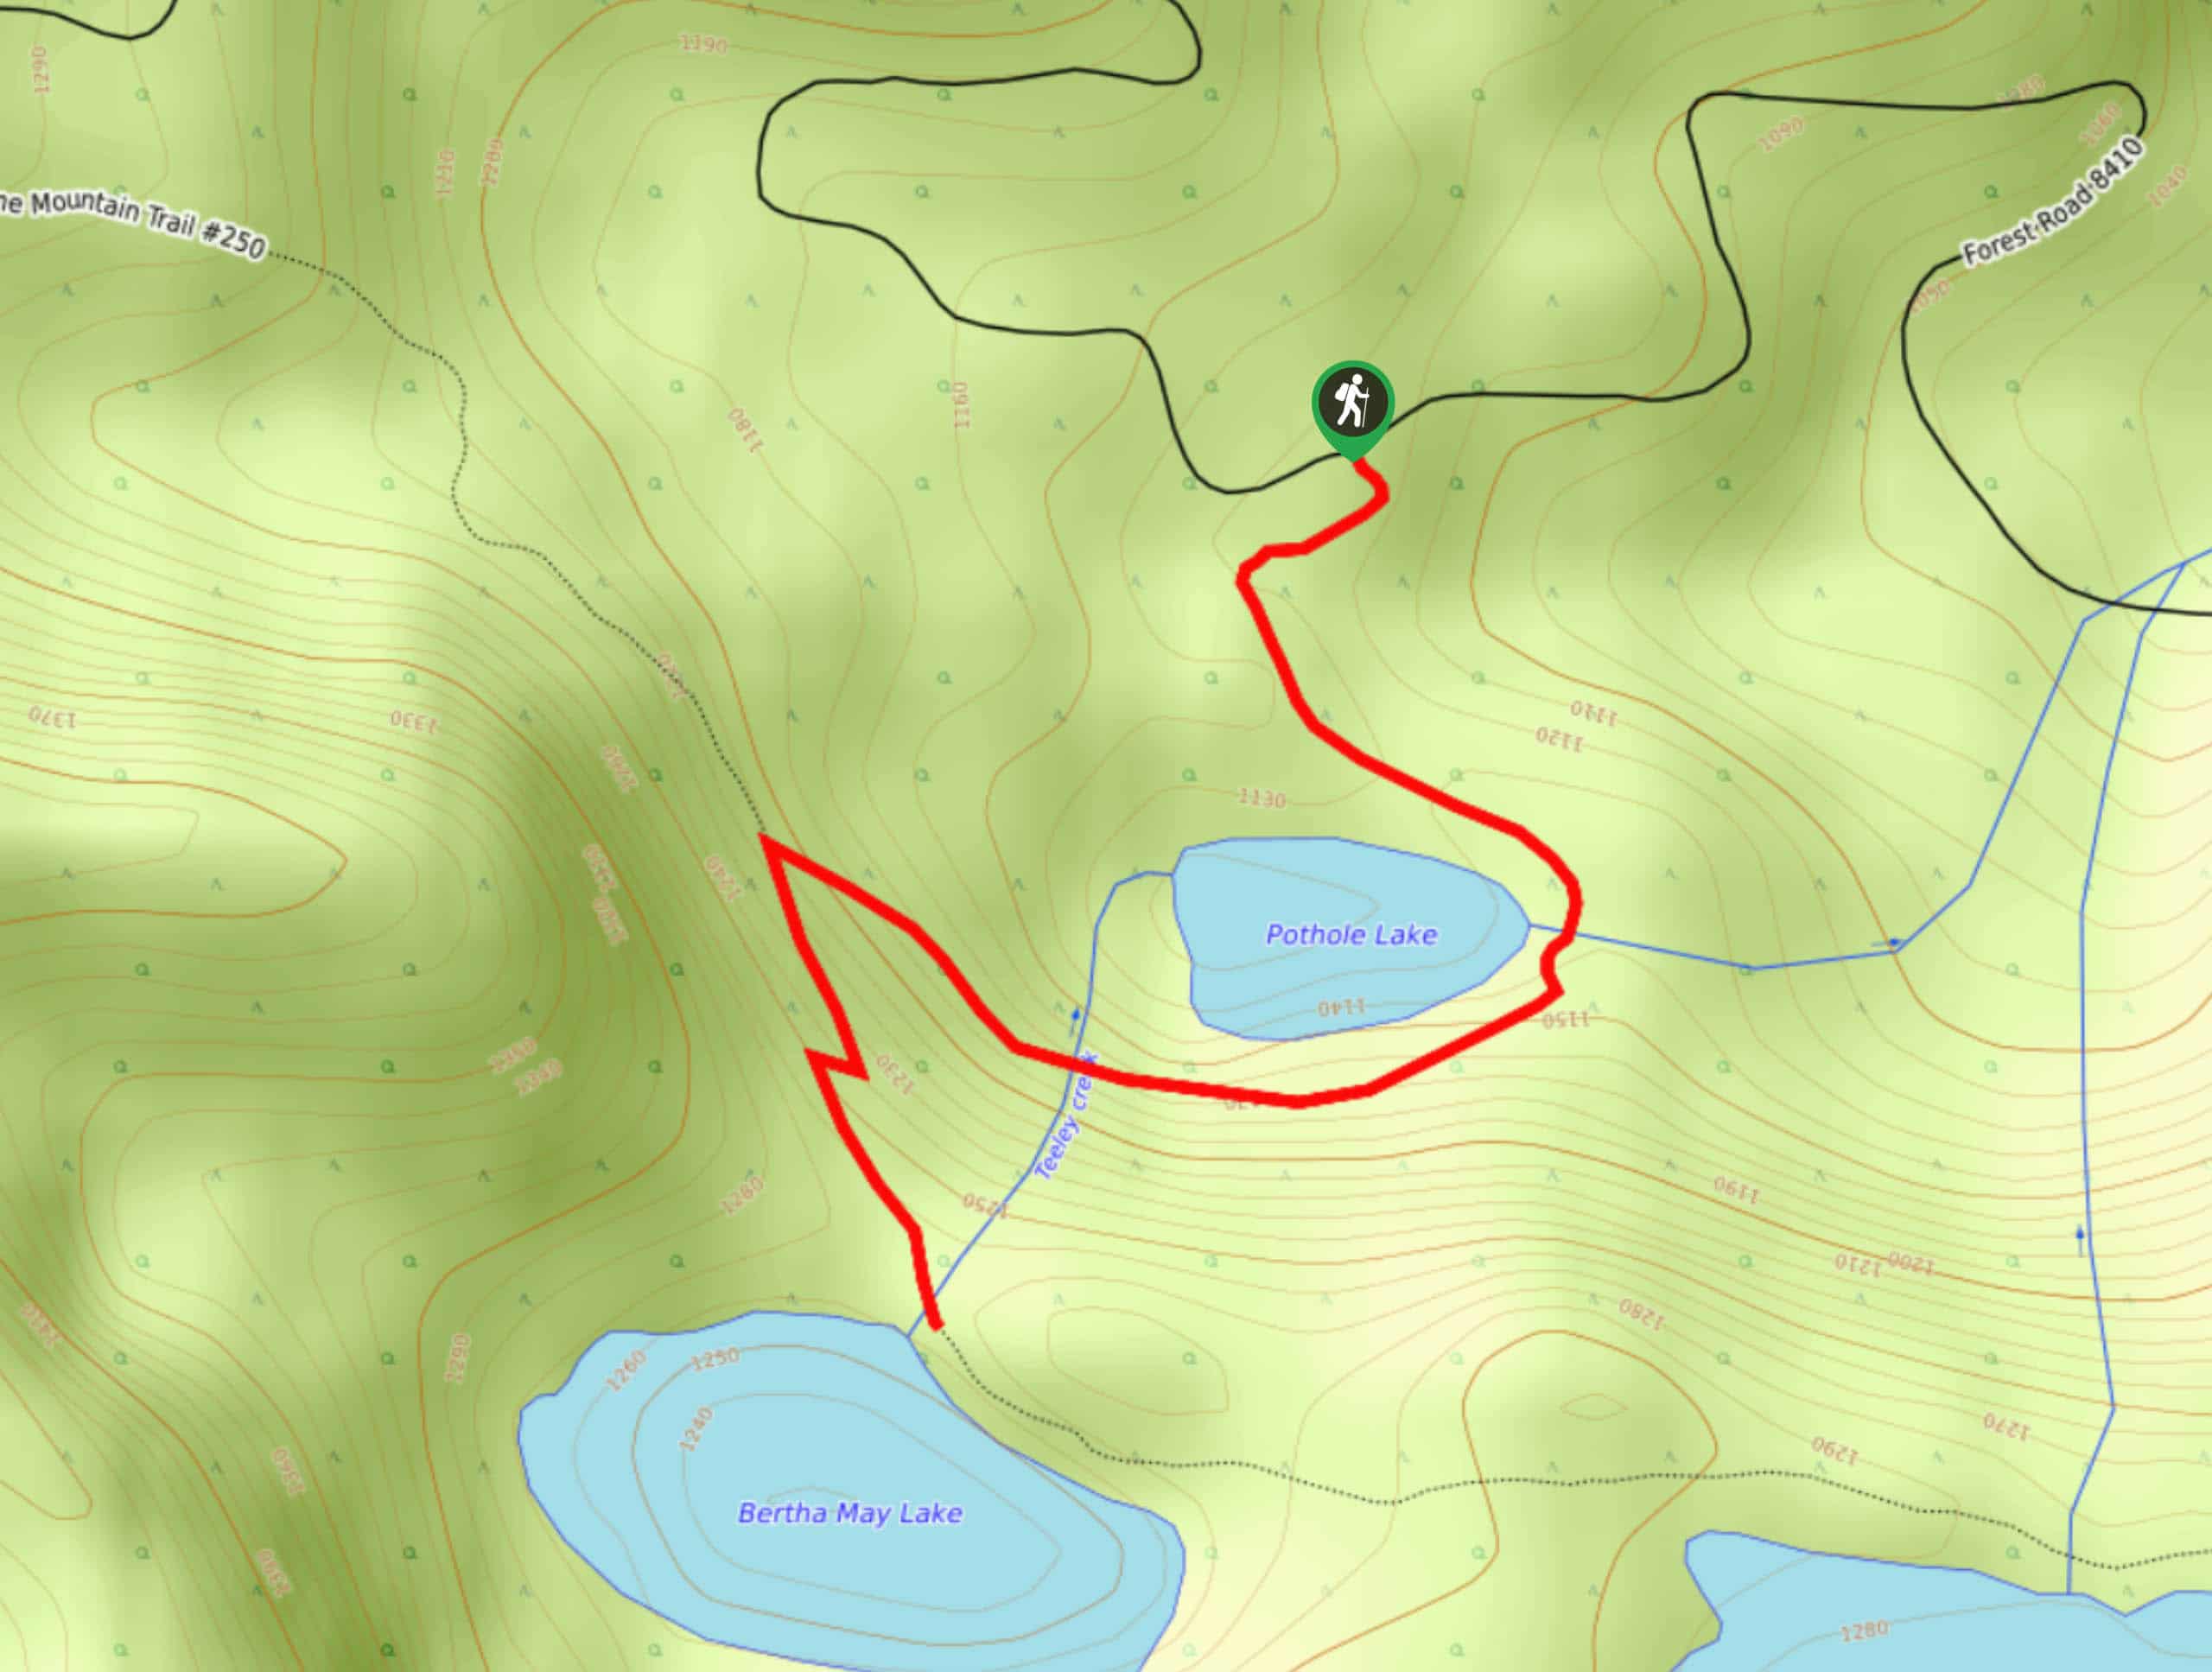 Bertha May Lake via Teeley Trail Map